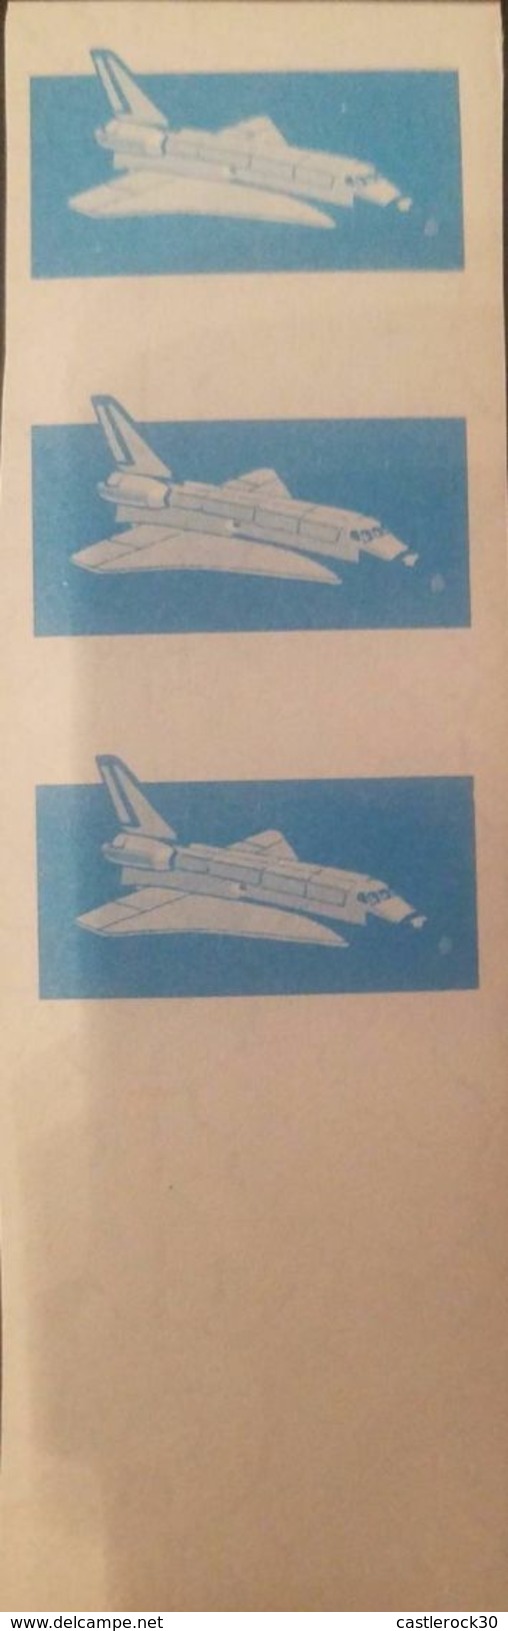 O) 1983 URUGUAY, PROOF IMPERFORATE, ERROR OF PRINT, FIRST SPACE SHUTTLE FLIGHT, SCOTT A464, MNH - Uruguay